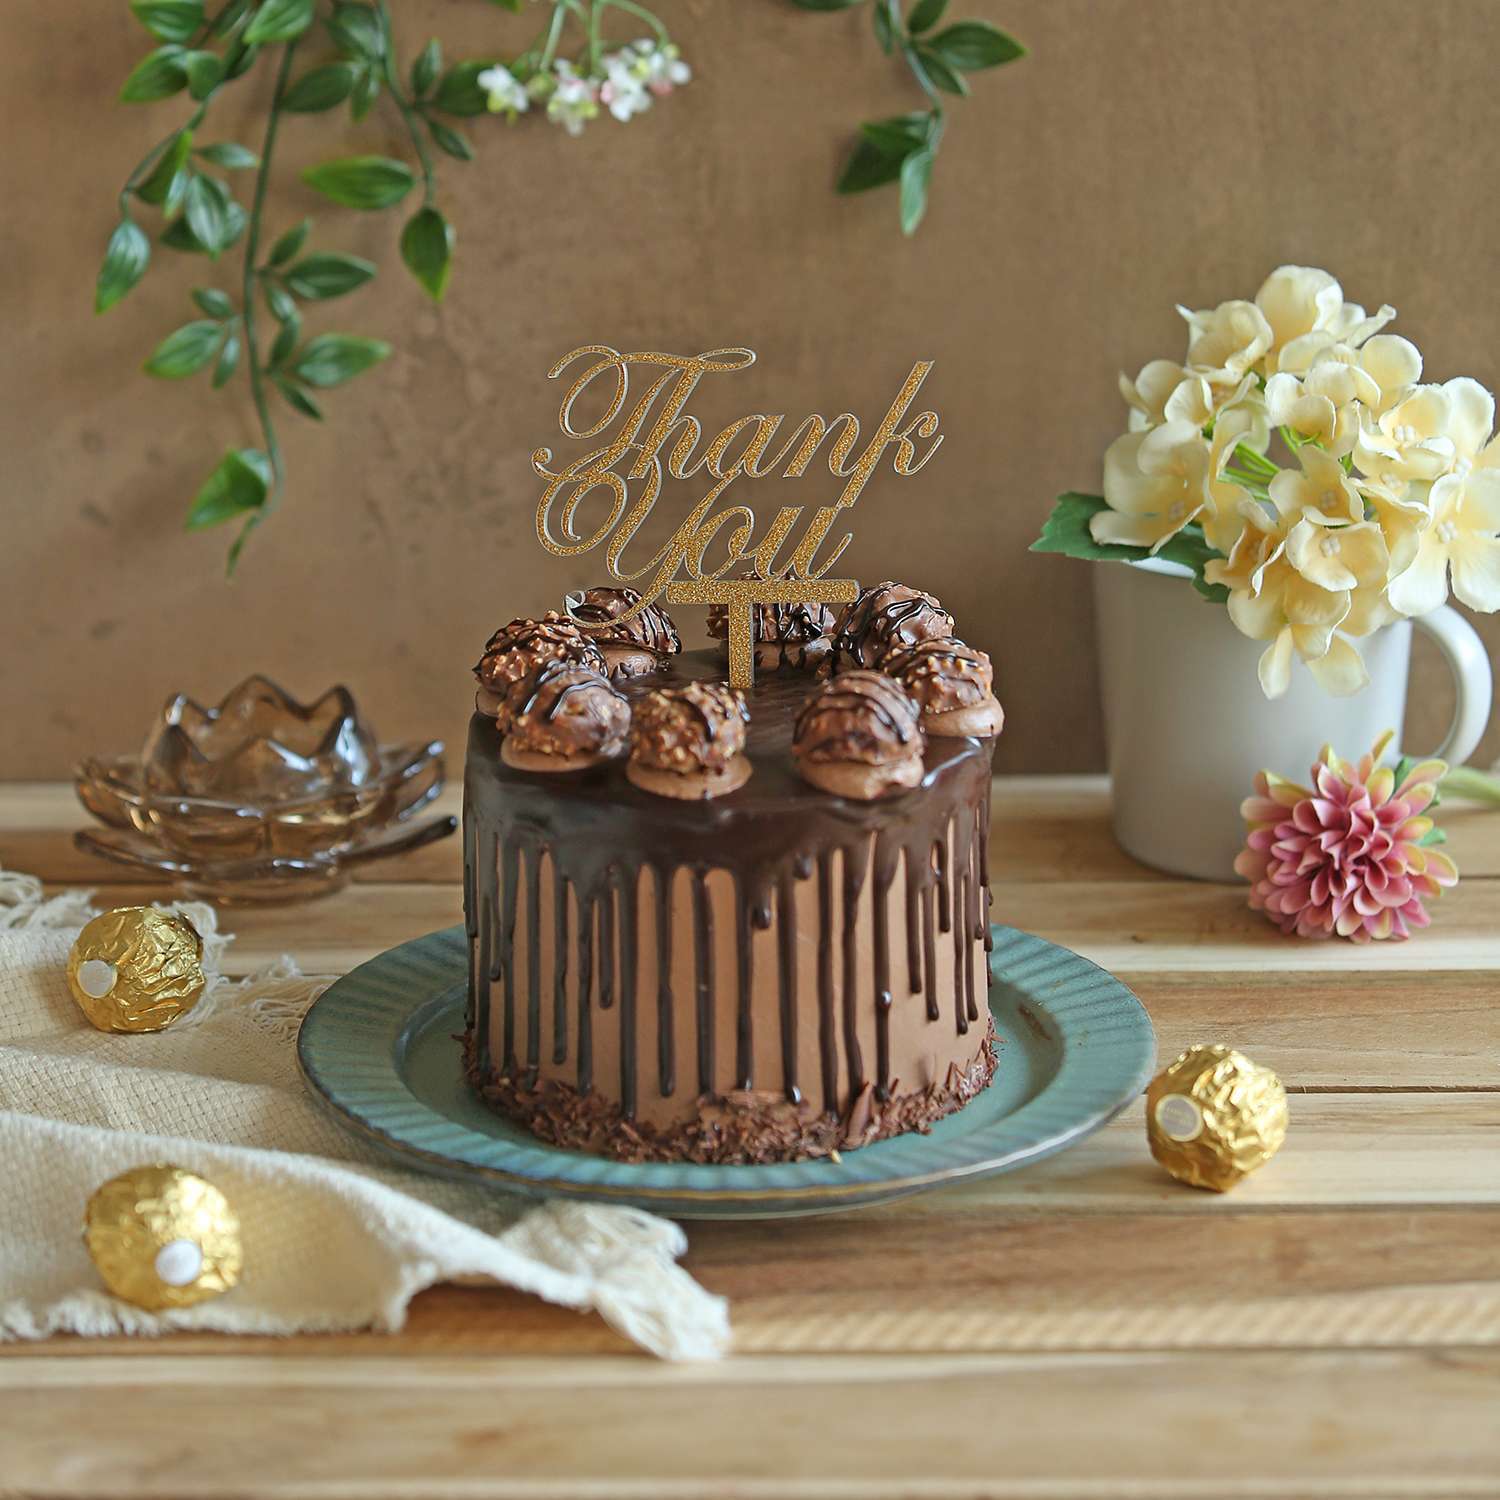 Ferrero Rocher chocolate cake (Eggless) - Ovenfresh